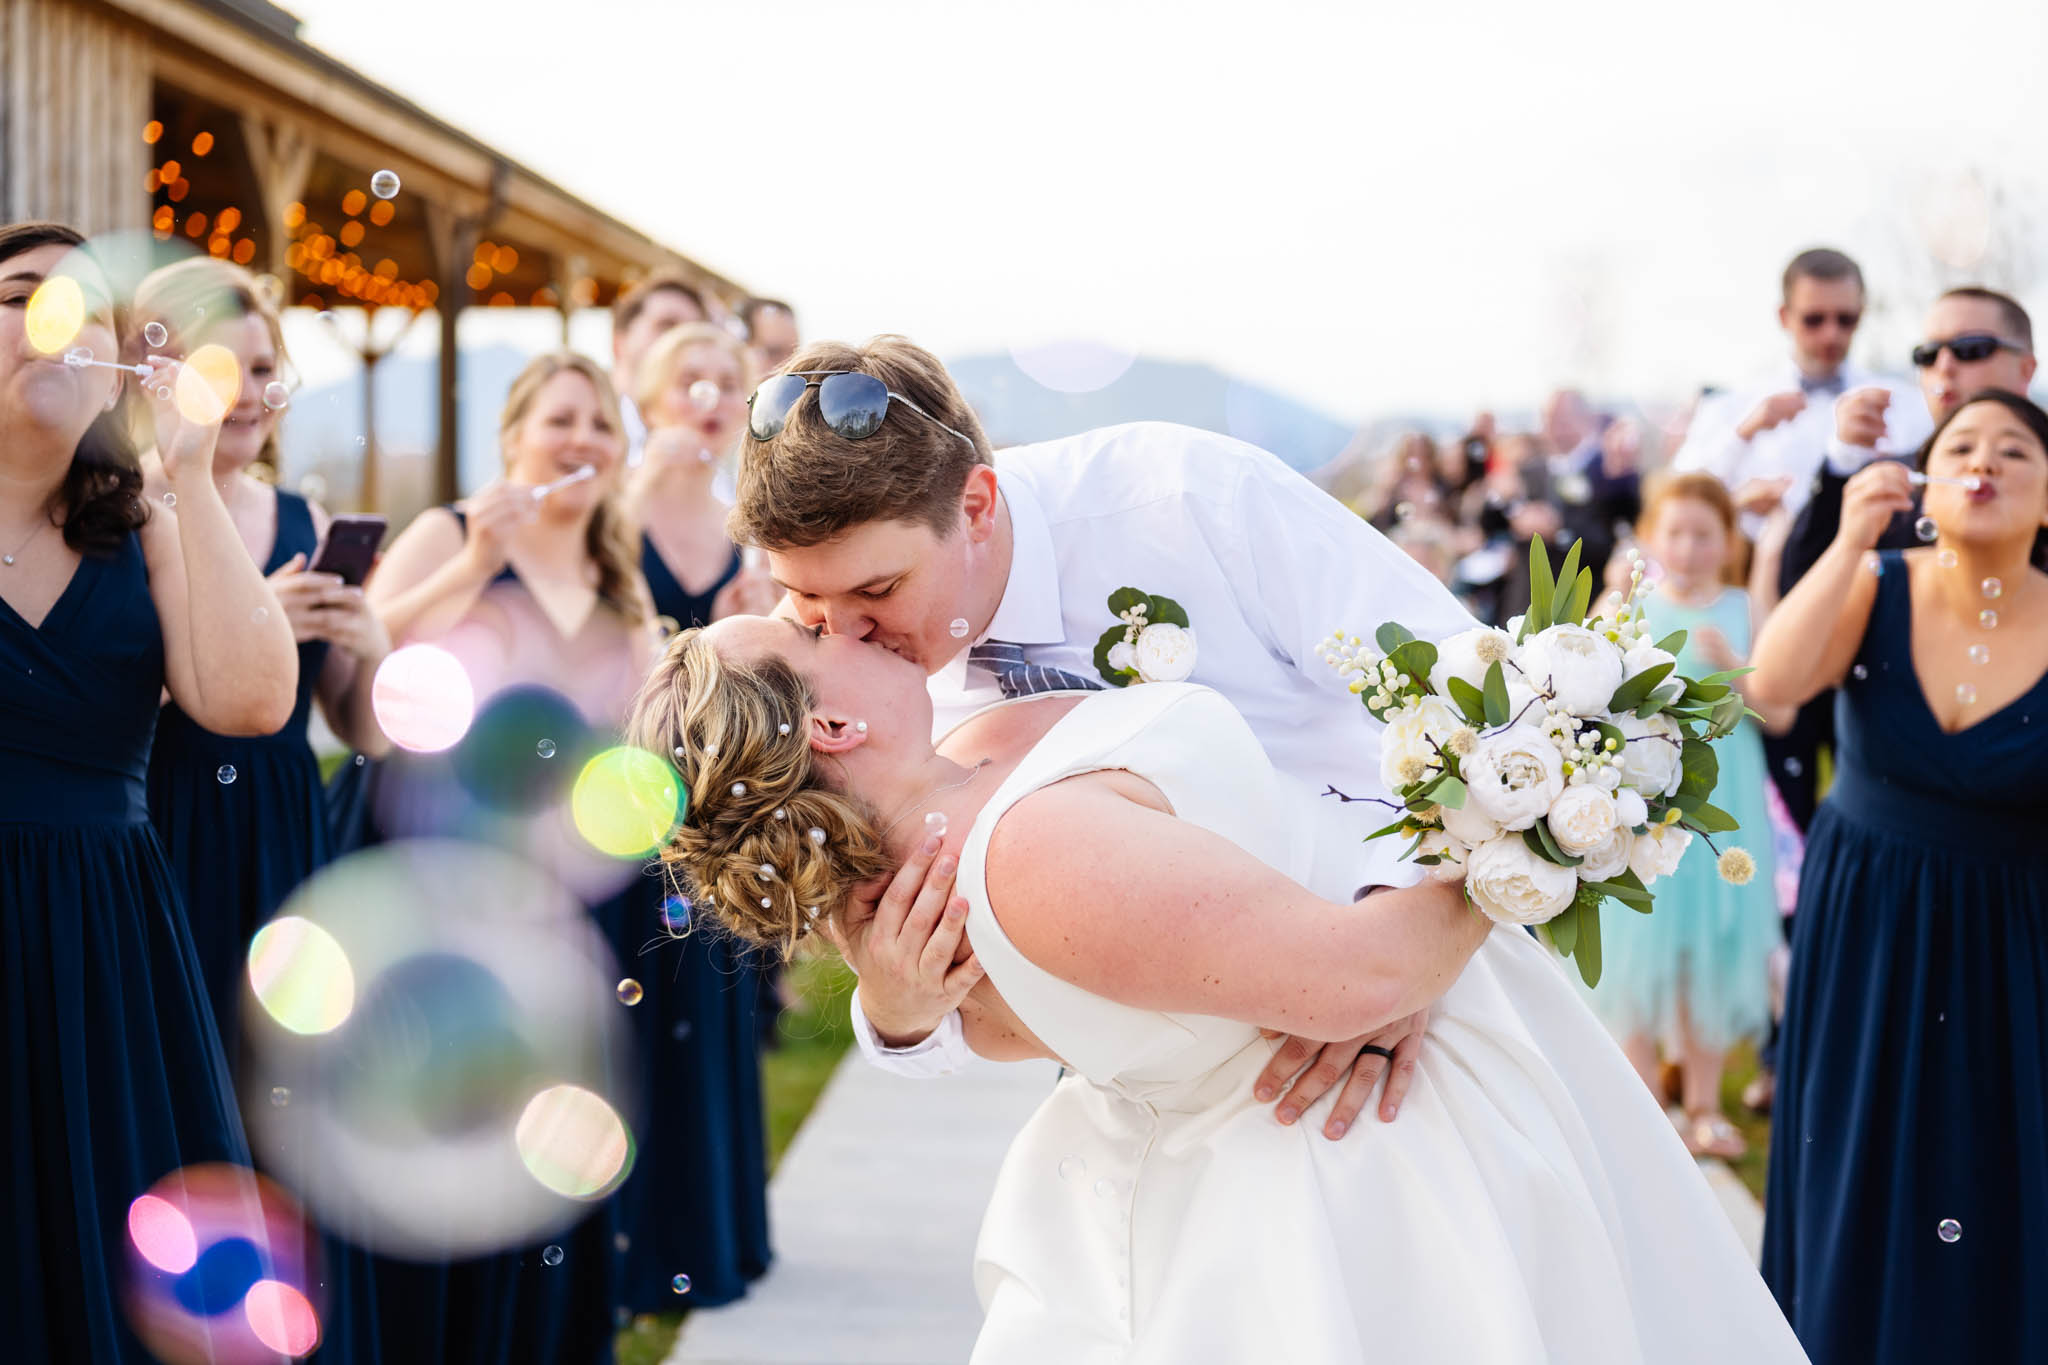 bubble exit at wedding at cedar oaks farms by clark street photography